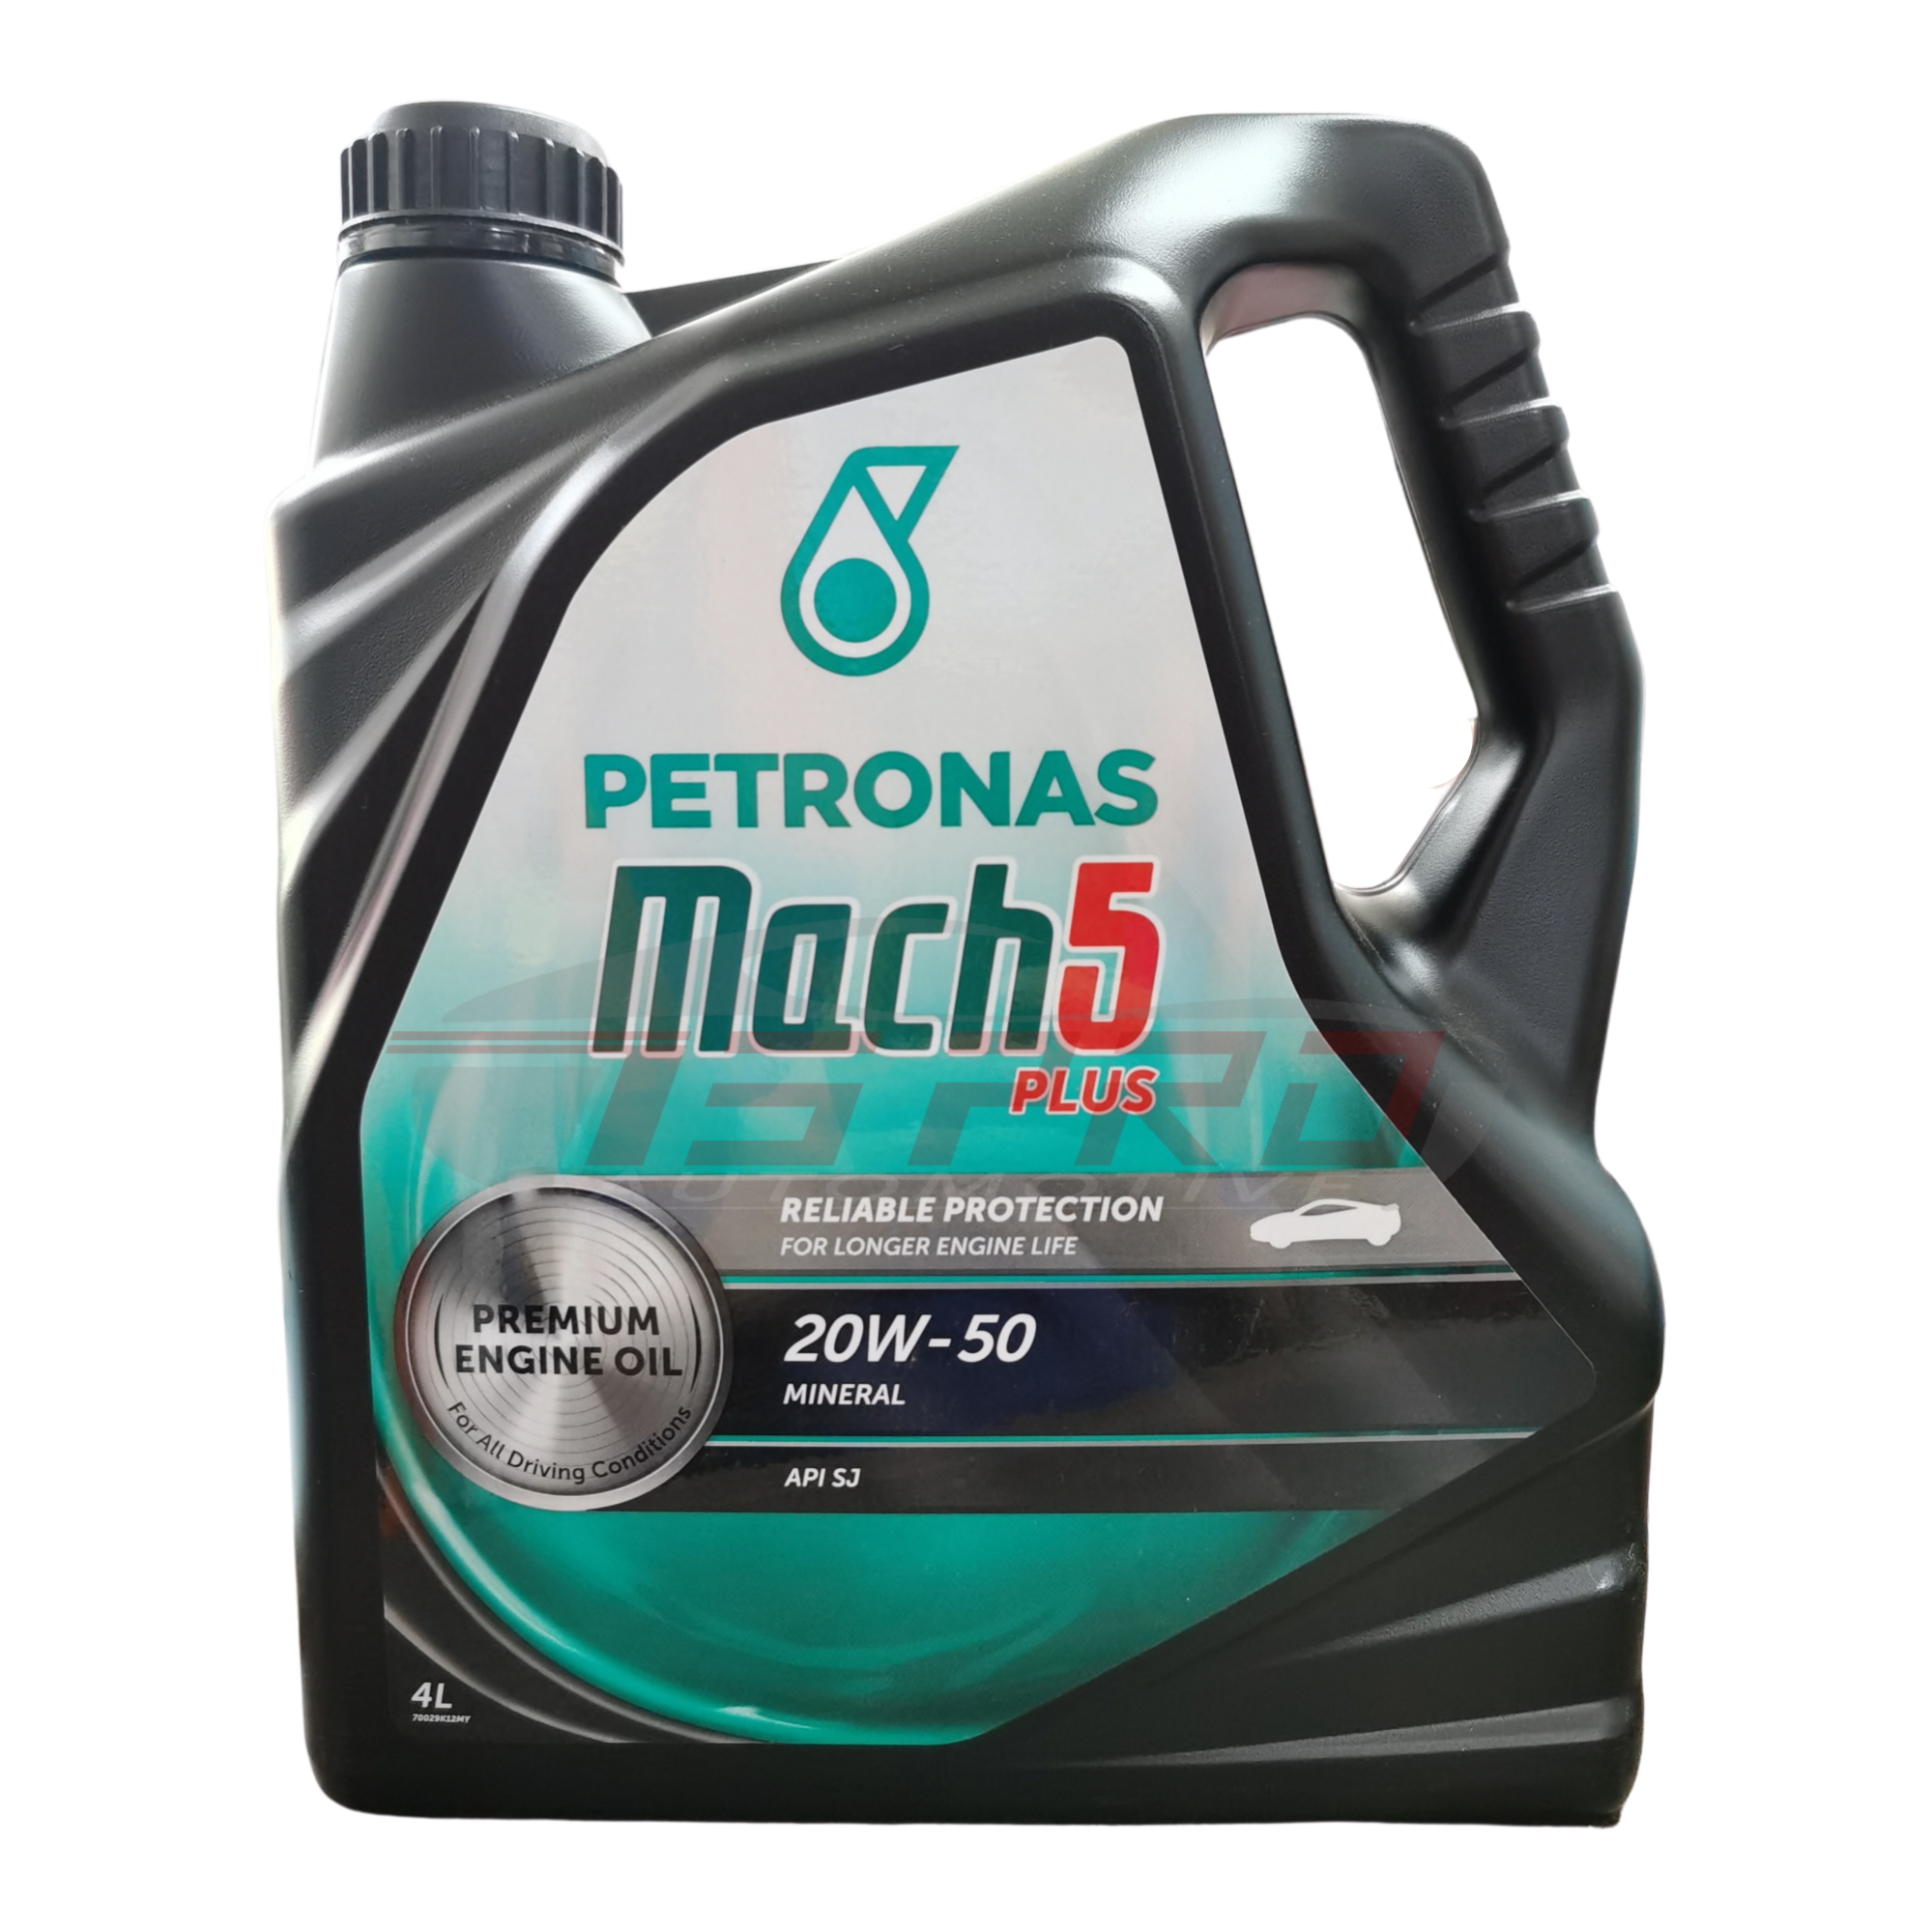 Petronas Mach5 Plus 20W50 20W-50 Engine Oil 4L Mileage 5000km Premium Mineral